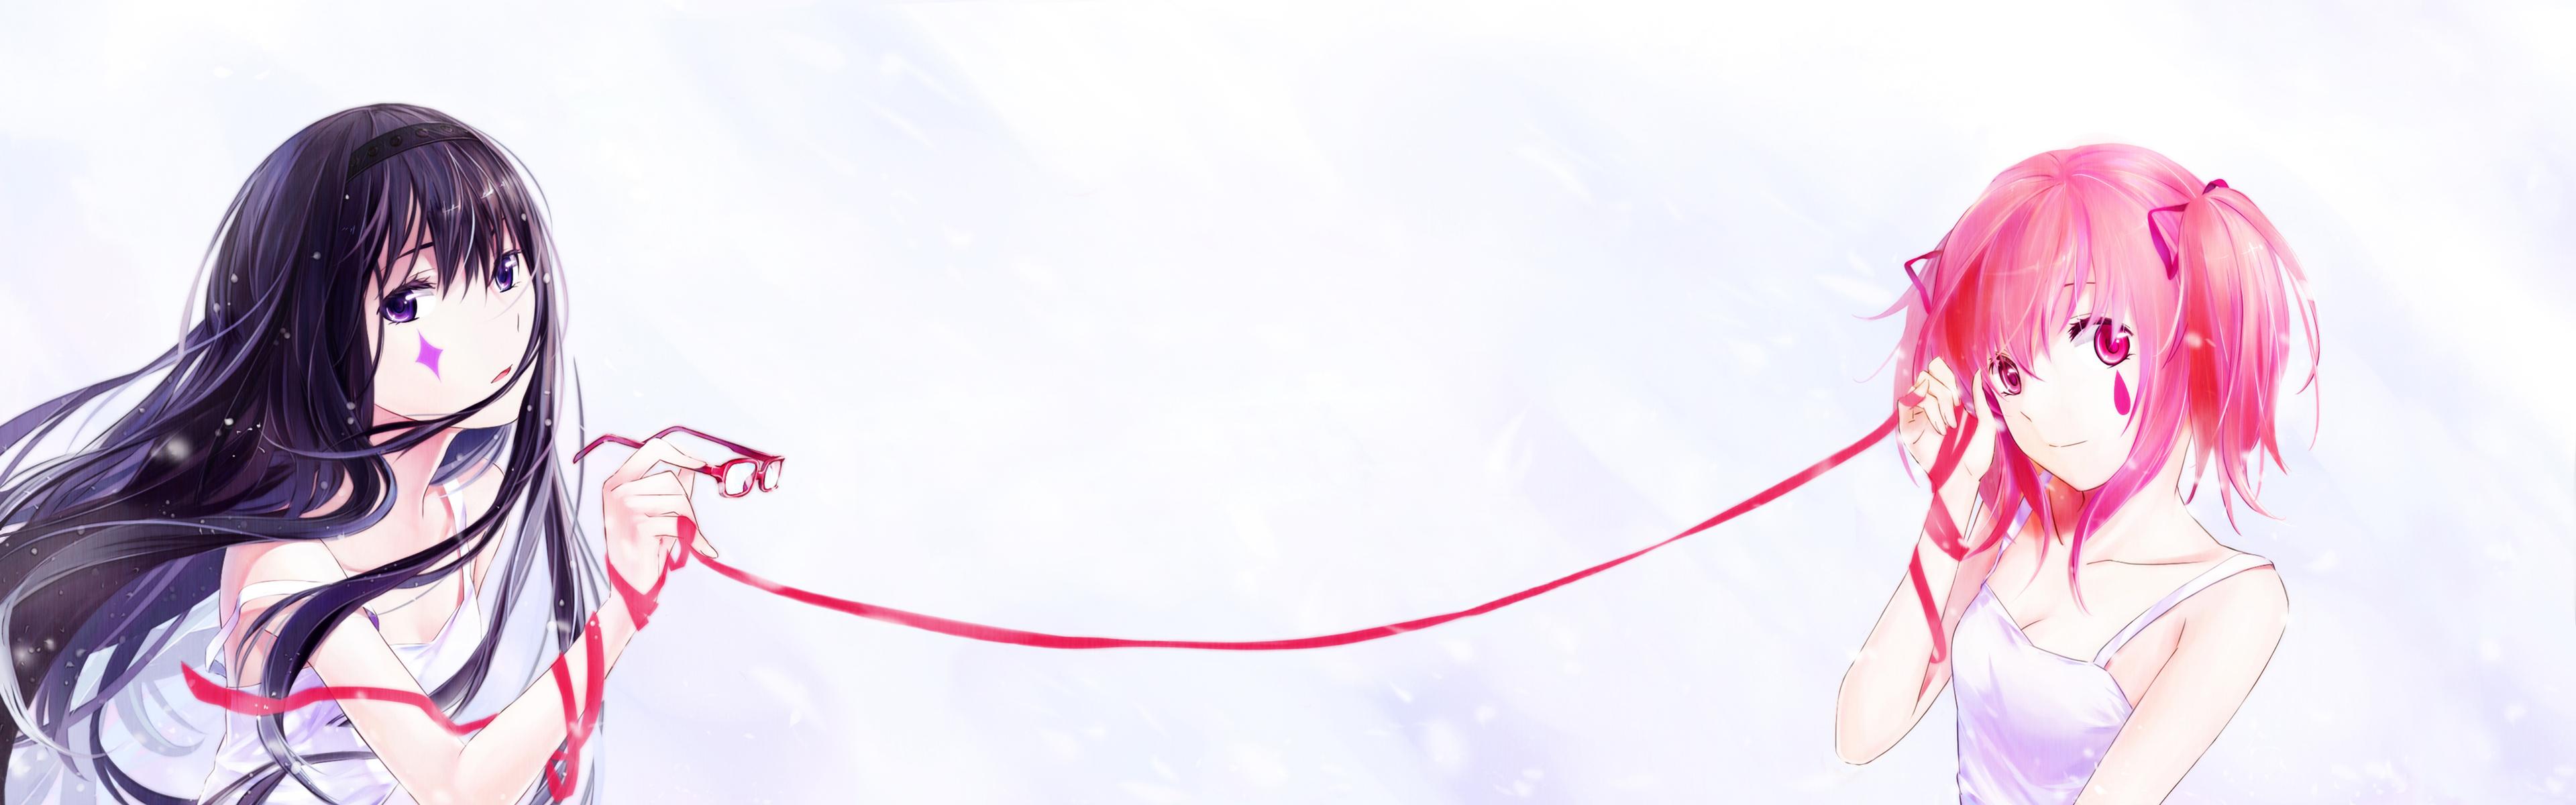 Anime Dual Monitor Backgrounds Free Download | PixelsTalk.Net